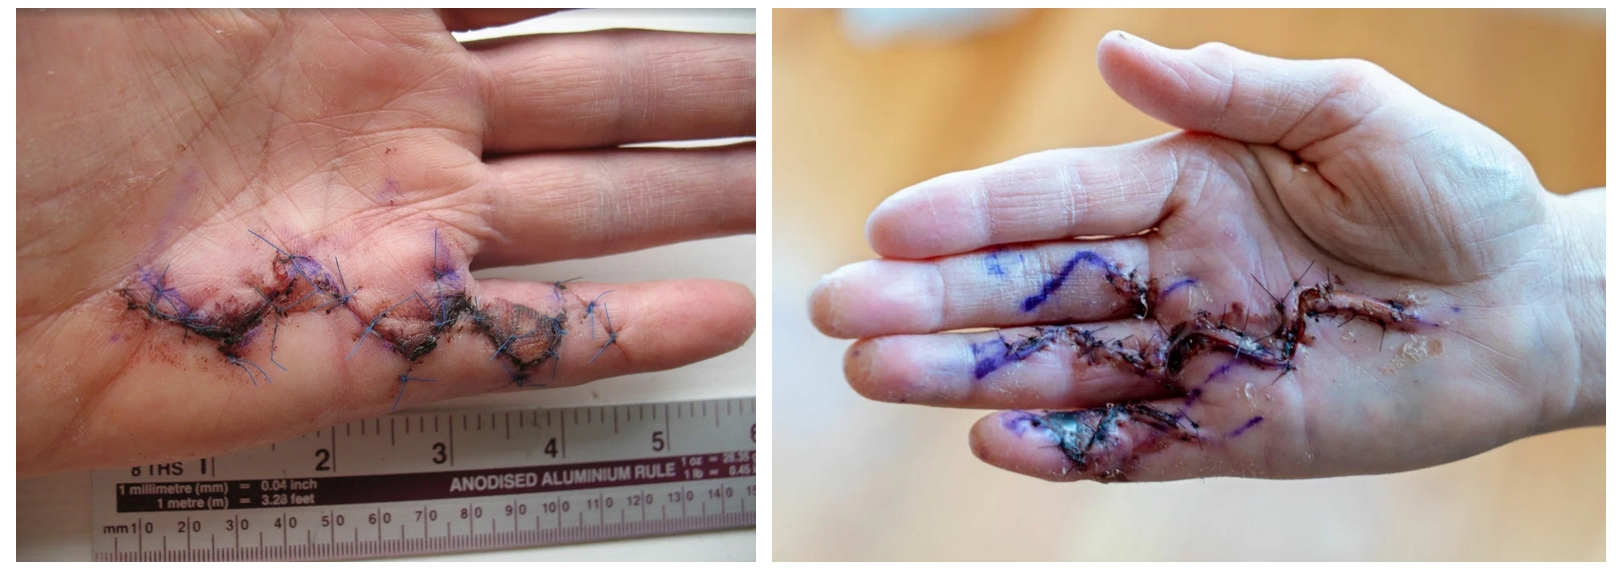 Рука после операции